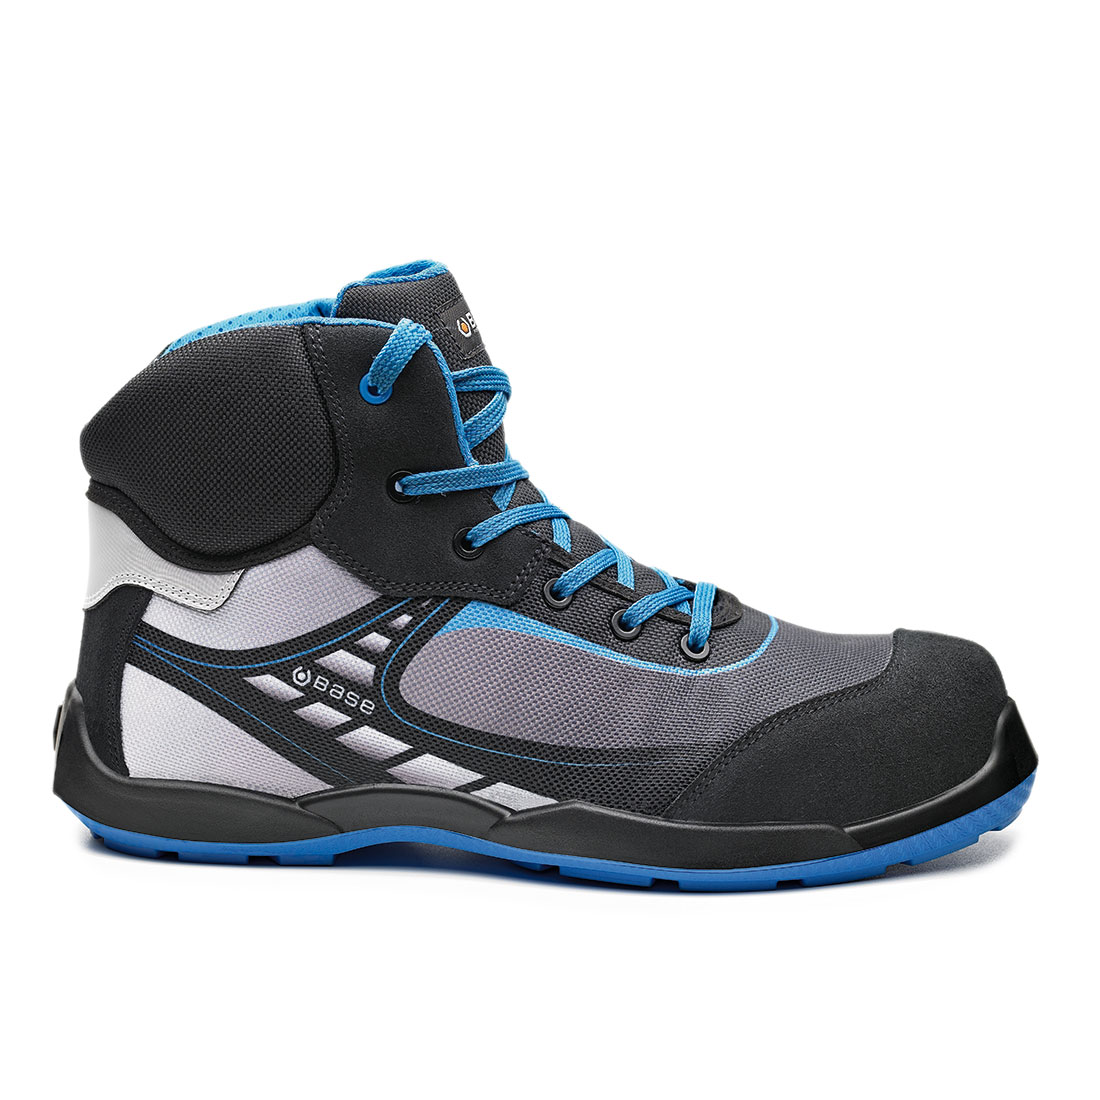 Base Bowling Top/Tennis Top Ankle Shoes Black/Blue B0678